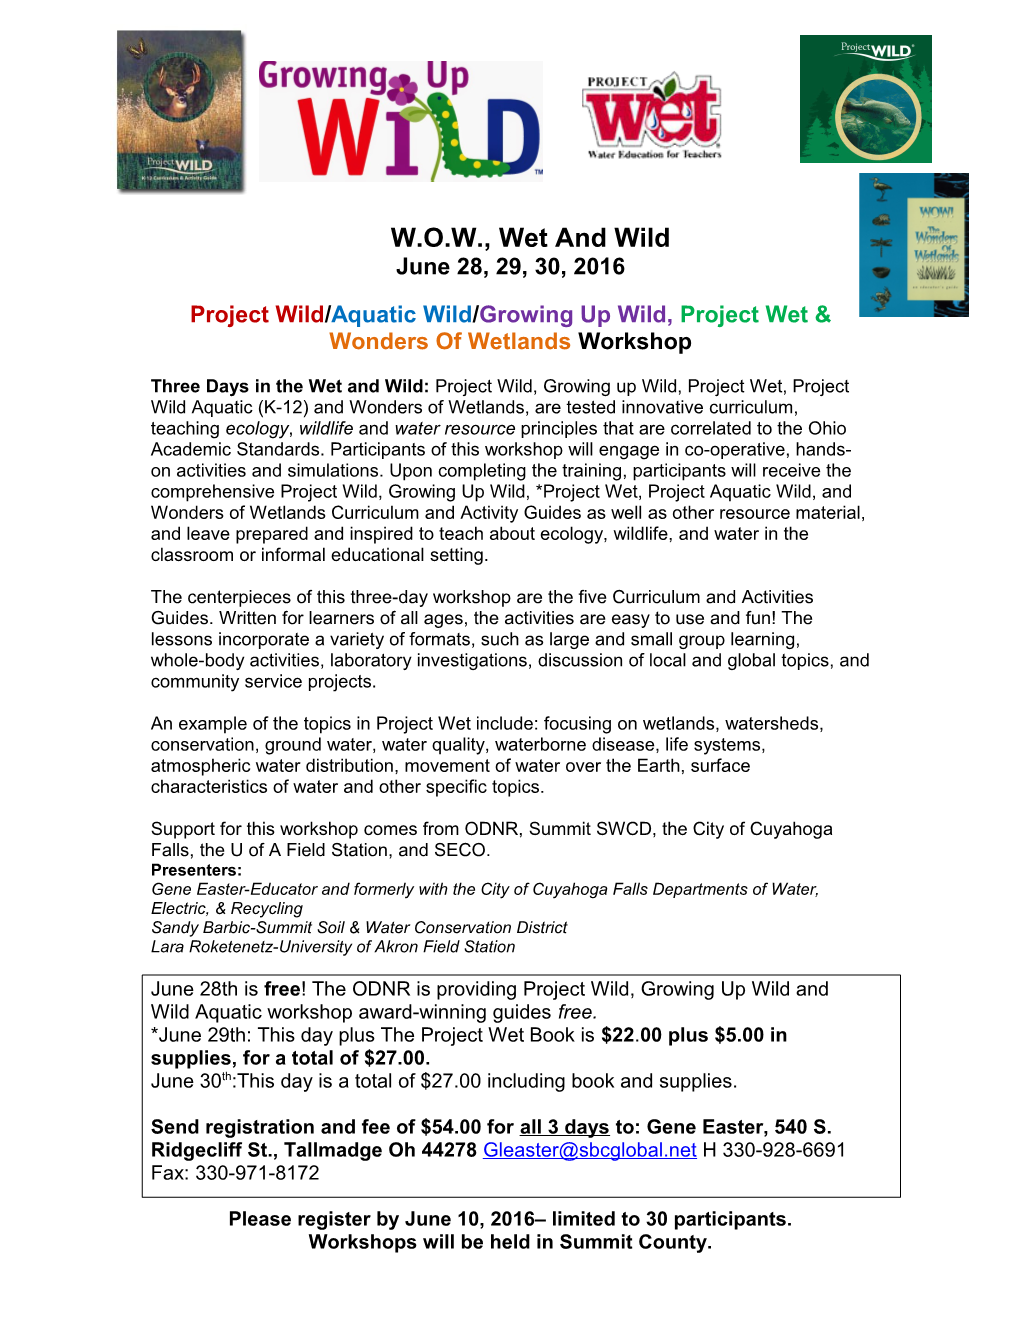 Project Wild Workshop